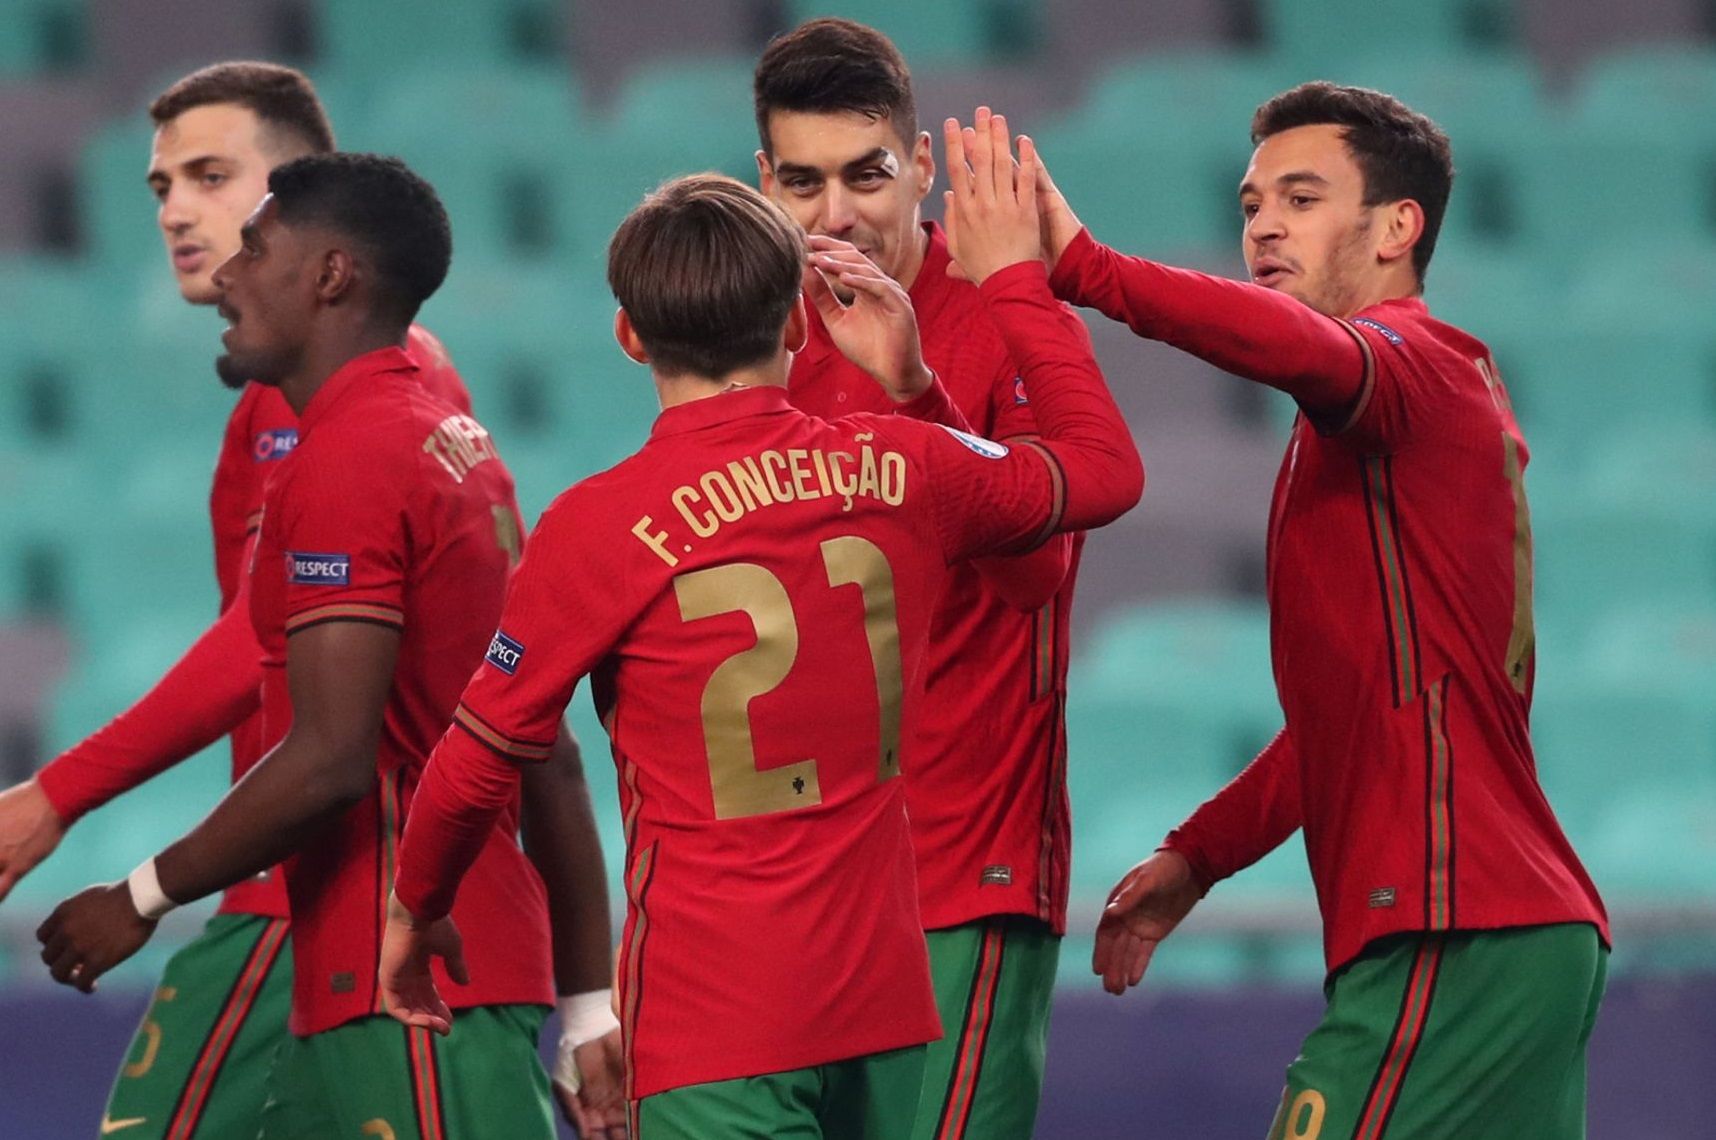 Португалия U21 — Италия U21 прогноз 31 мая 2021: ставки и коэффициенты на матч молодежного Евро-2021